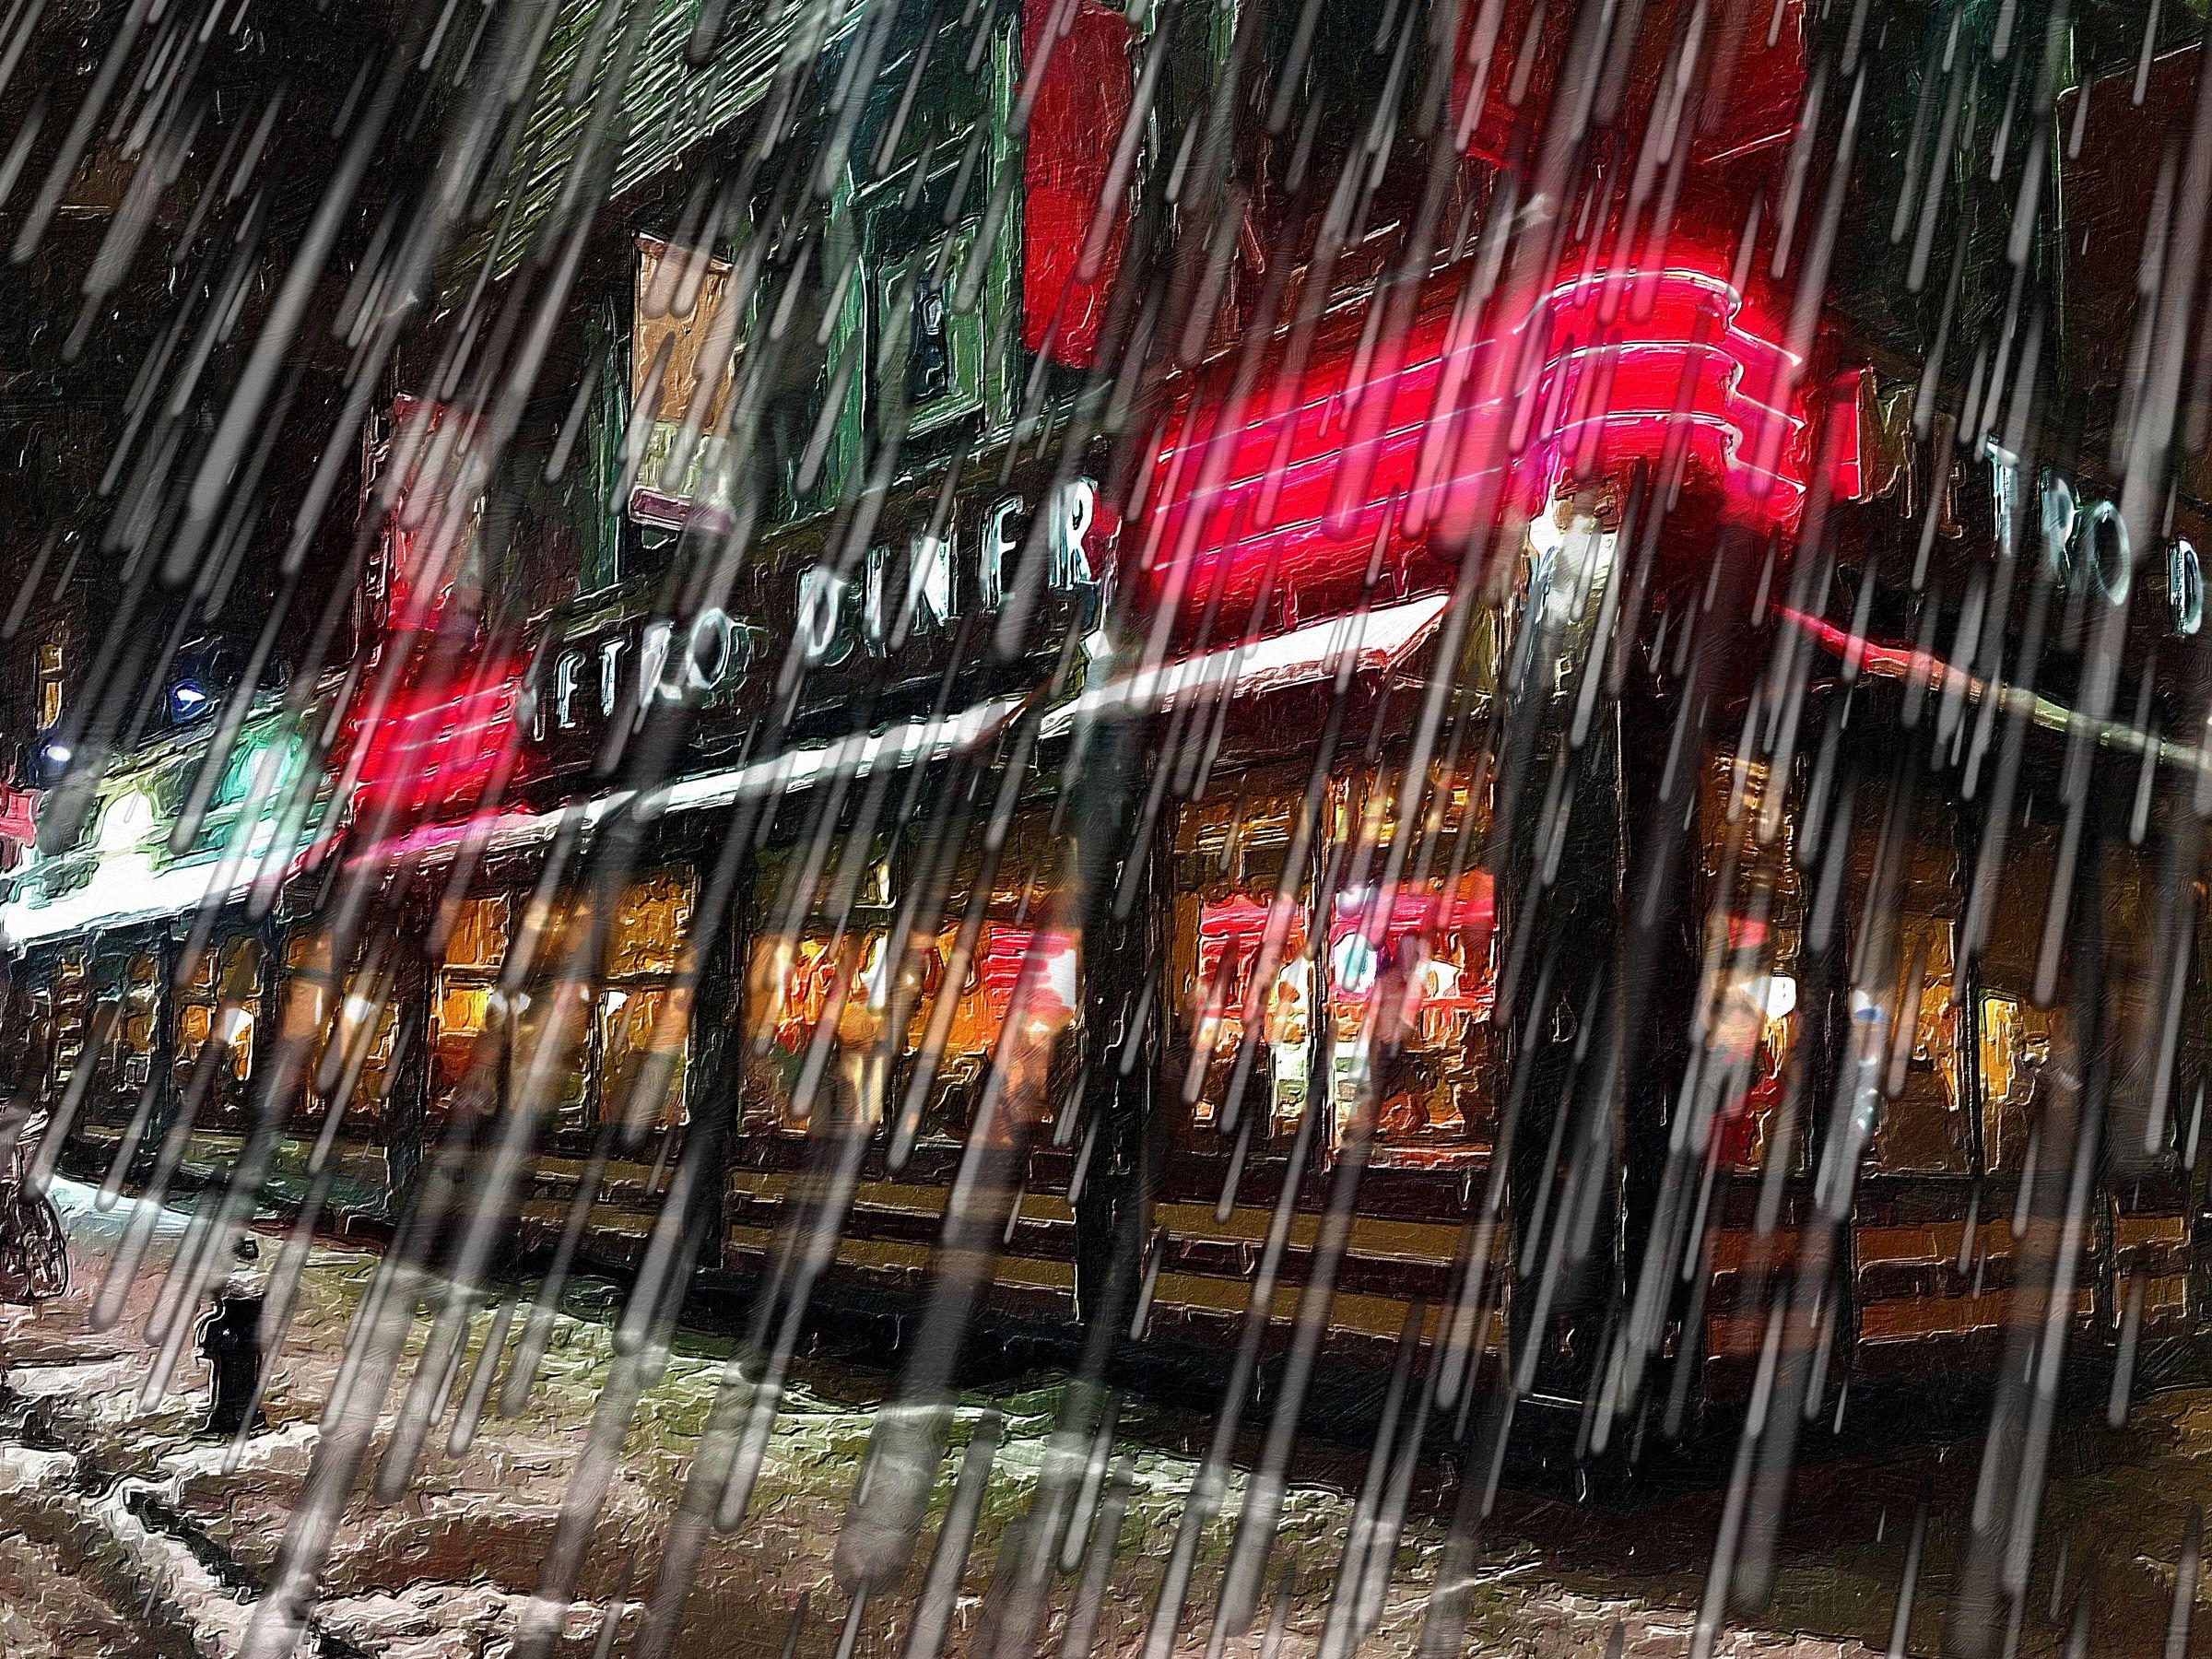 New York City Skyline Rain Snow Storm Diner, Mixed Media on Canvas